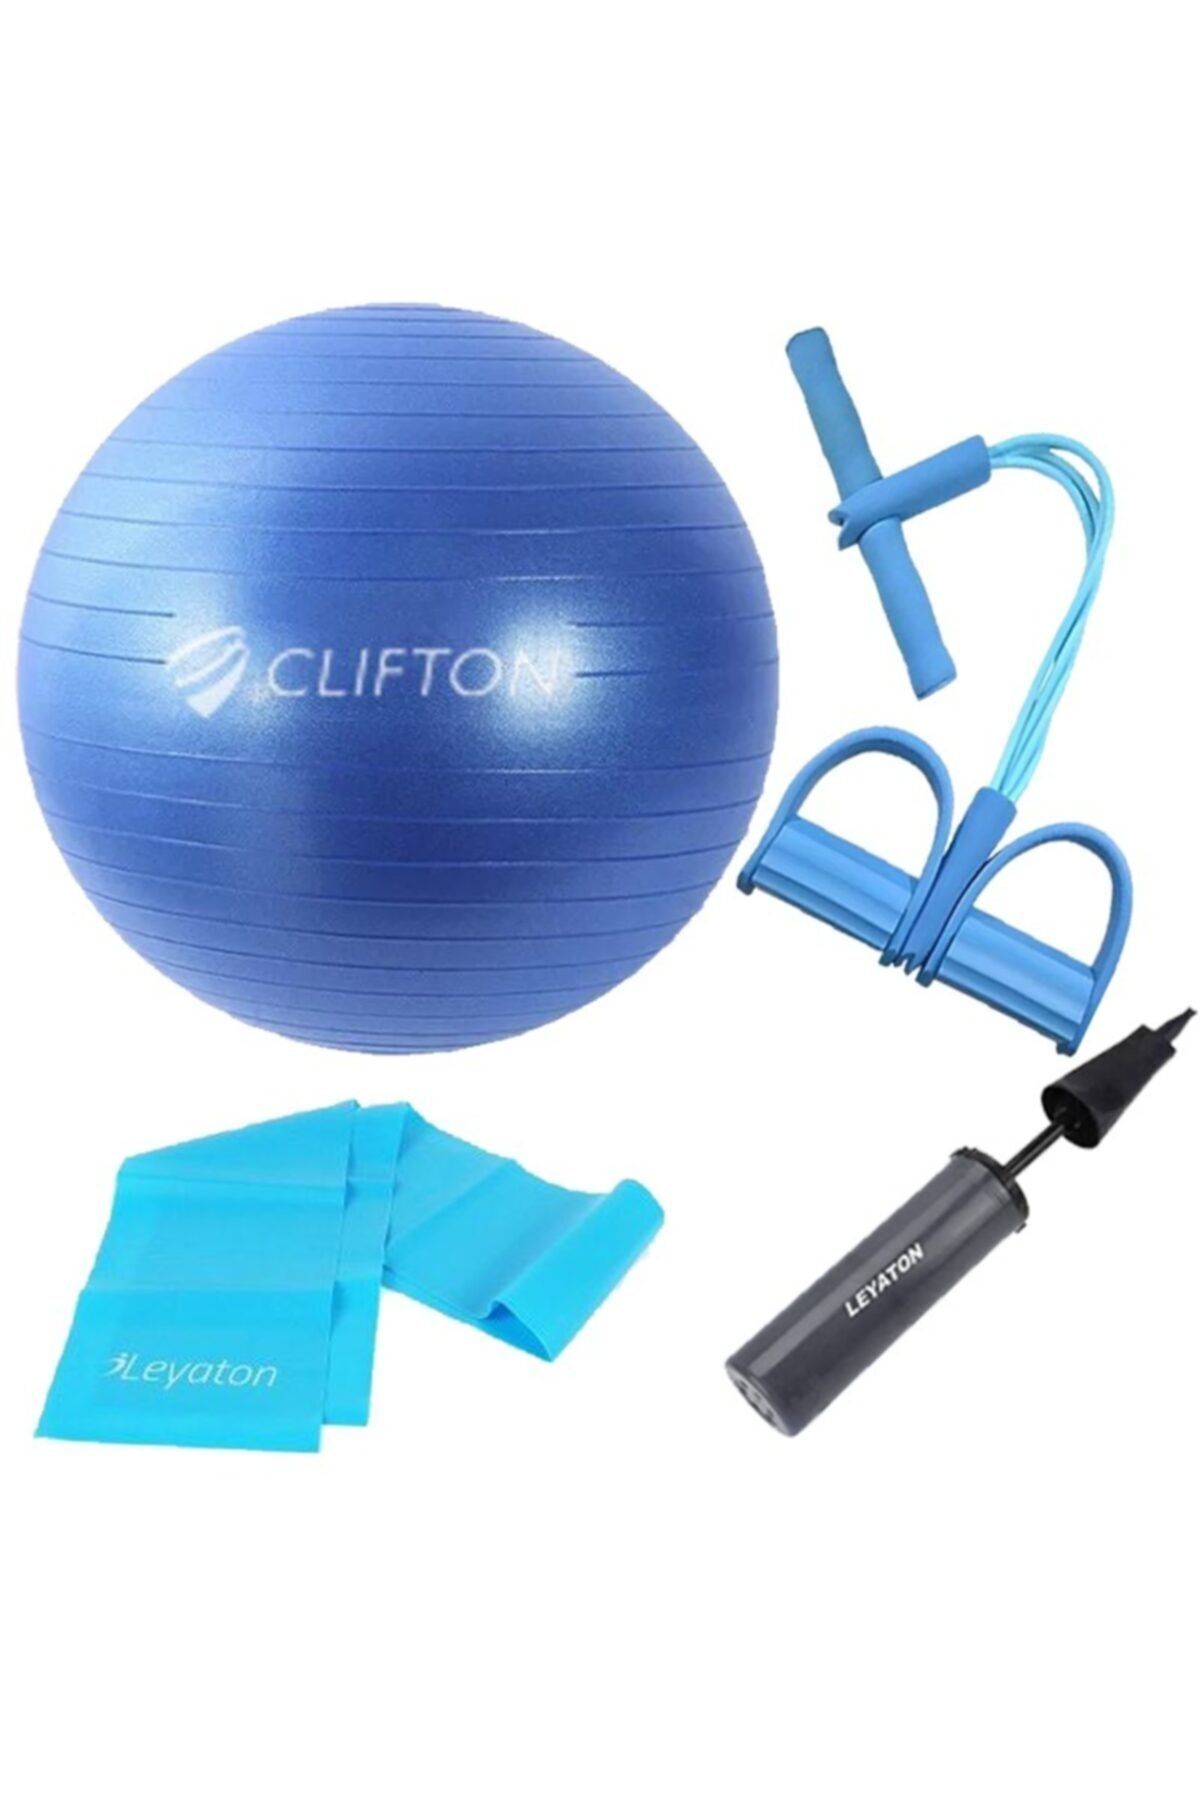 Clifton Anti-brust Yoga Pilates Denge Topu Mavi + Direnç Lastiği + Pilates Bandı + Pompa